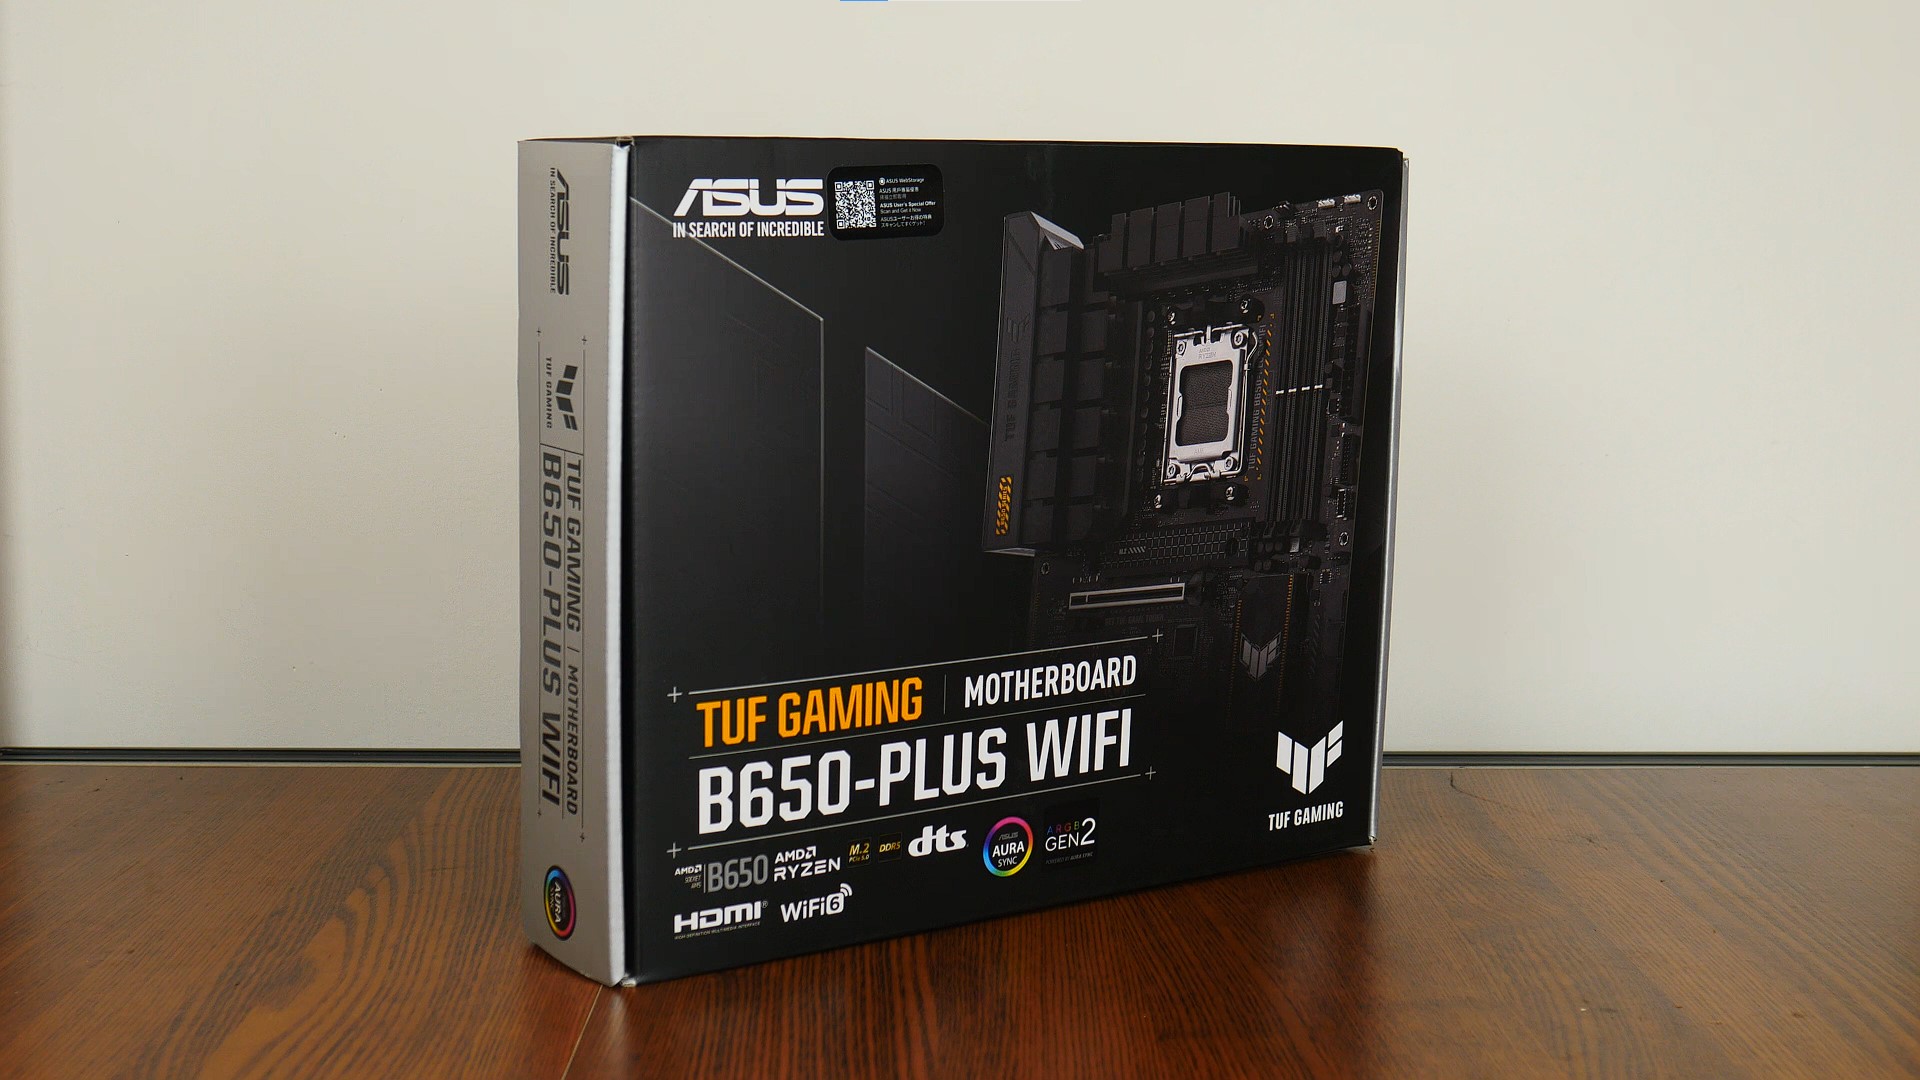 ASUS TUF Gaming B650-PLUS WIFI Packaging (Front)